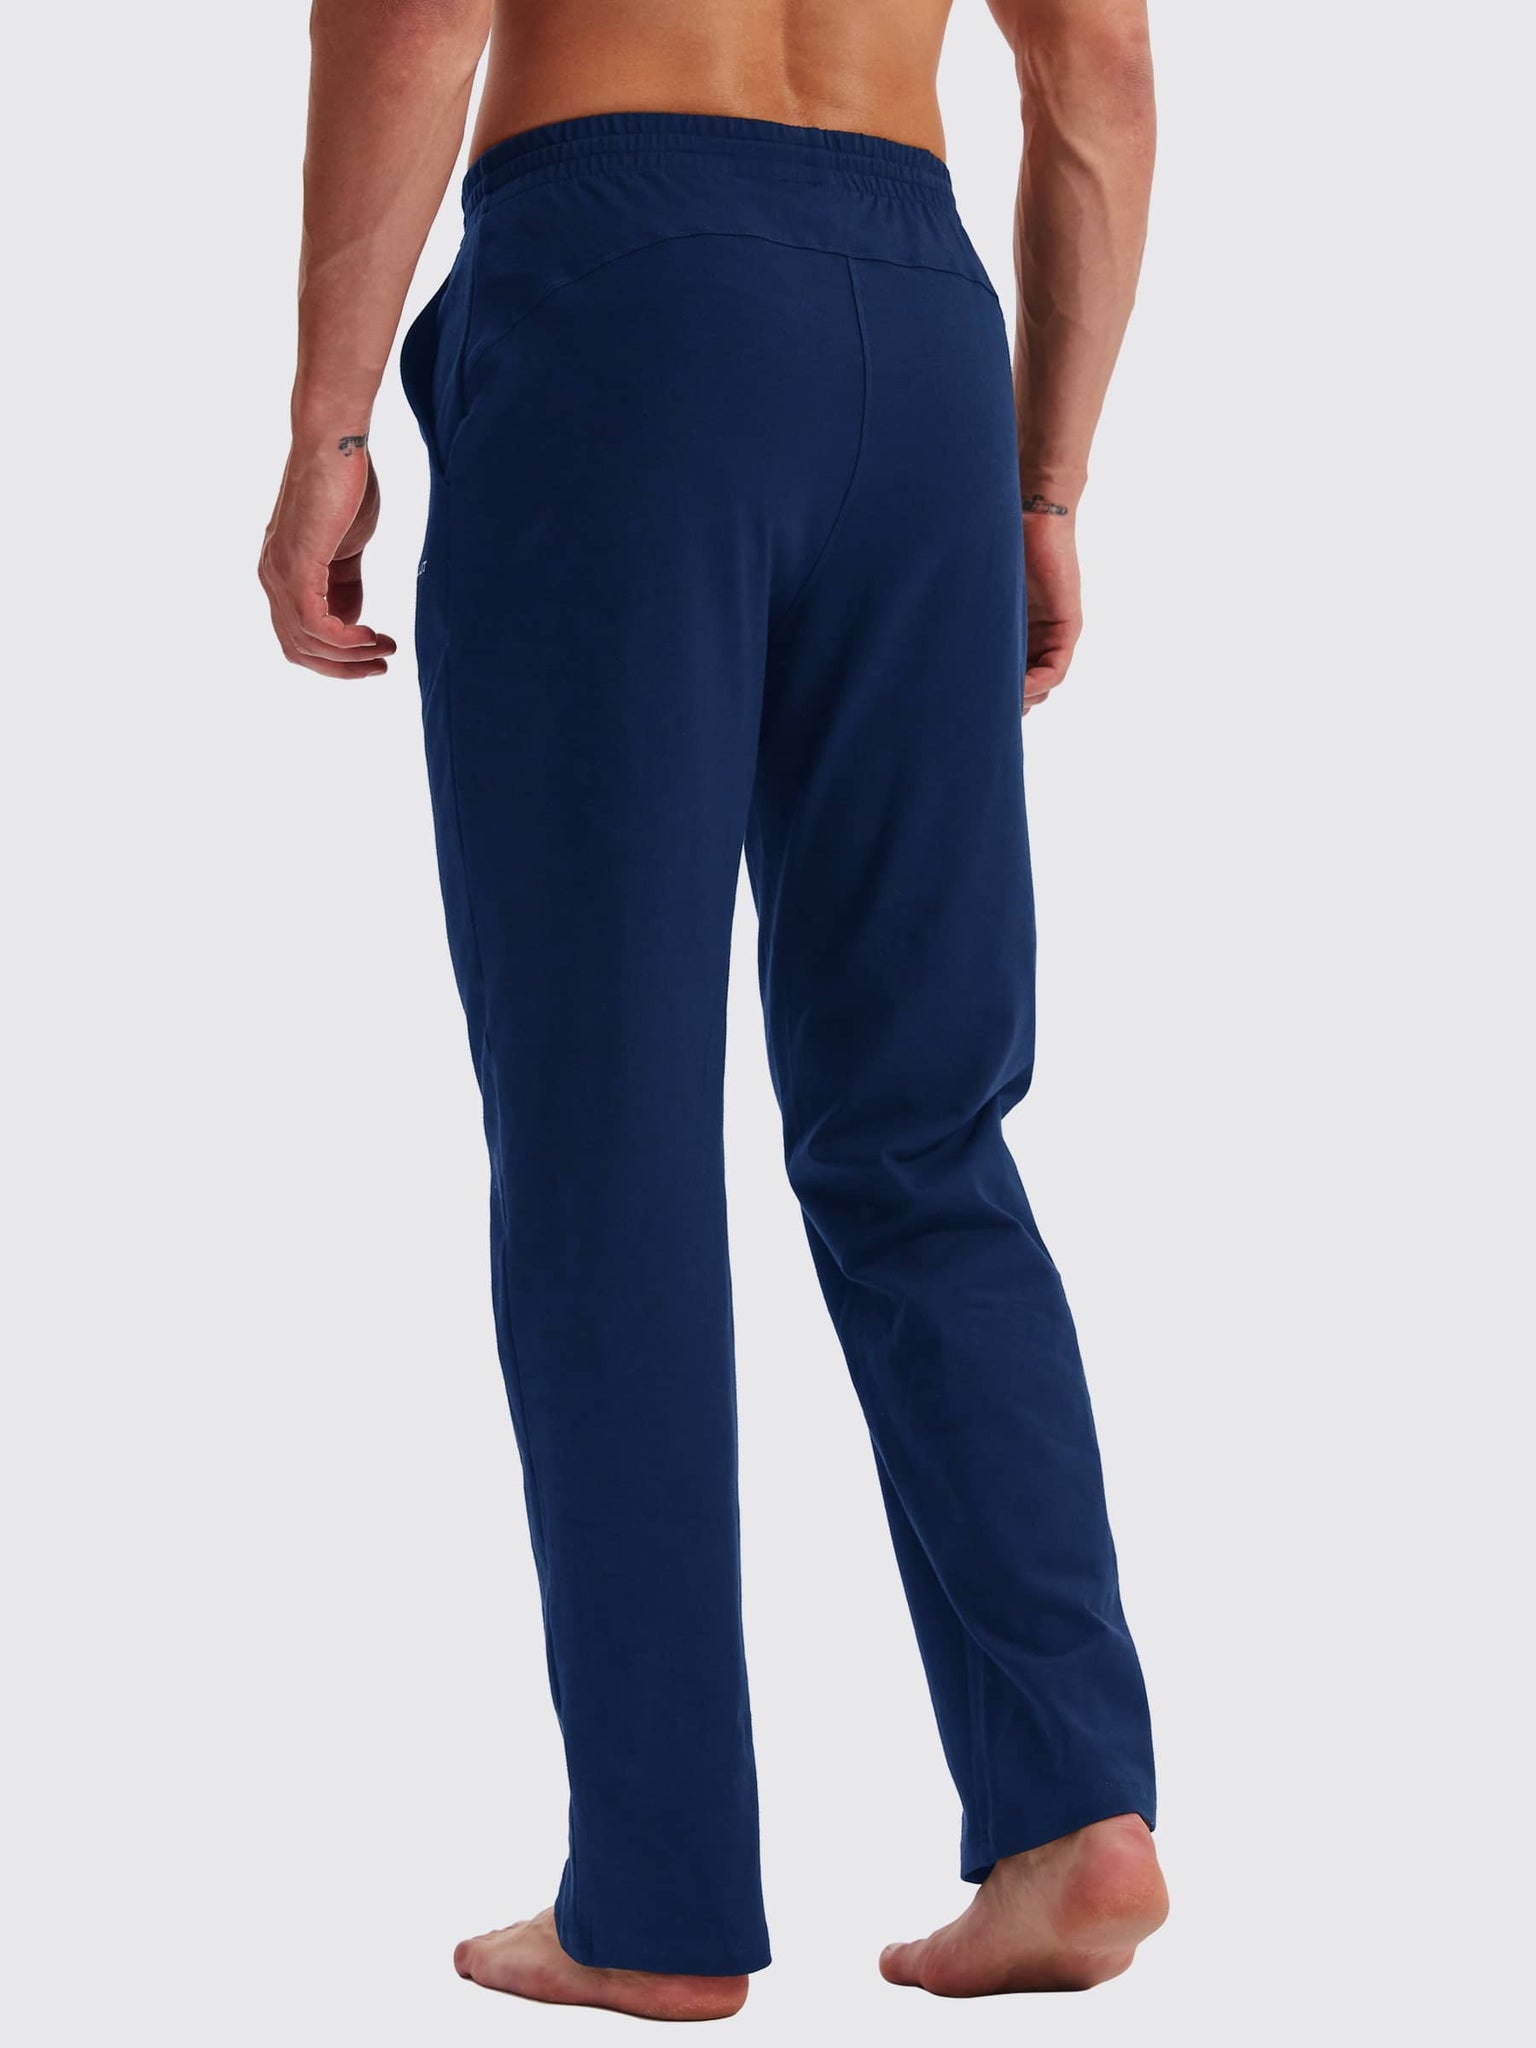 Men's Cotton Yoga Balance Sweatpants_Navy_model4